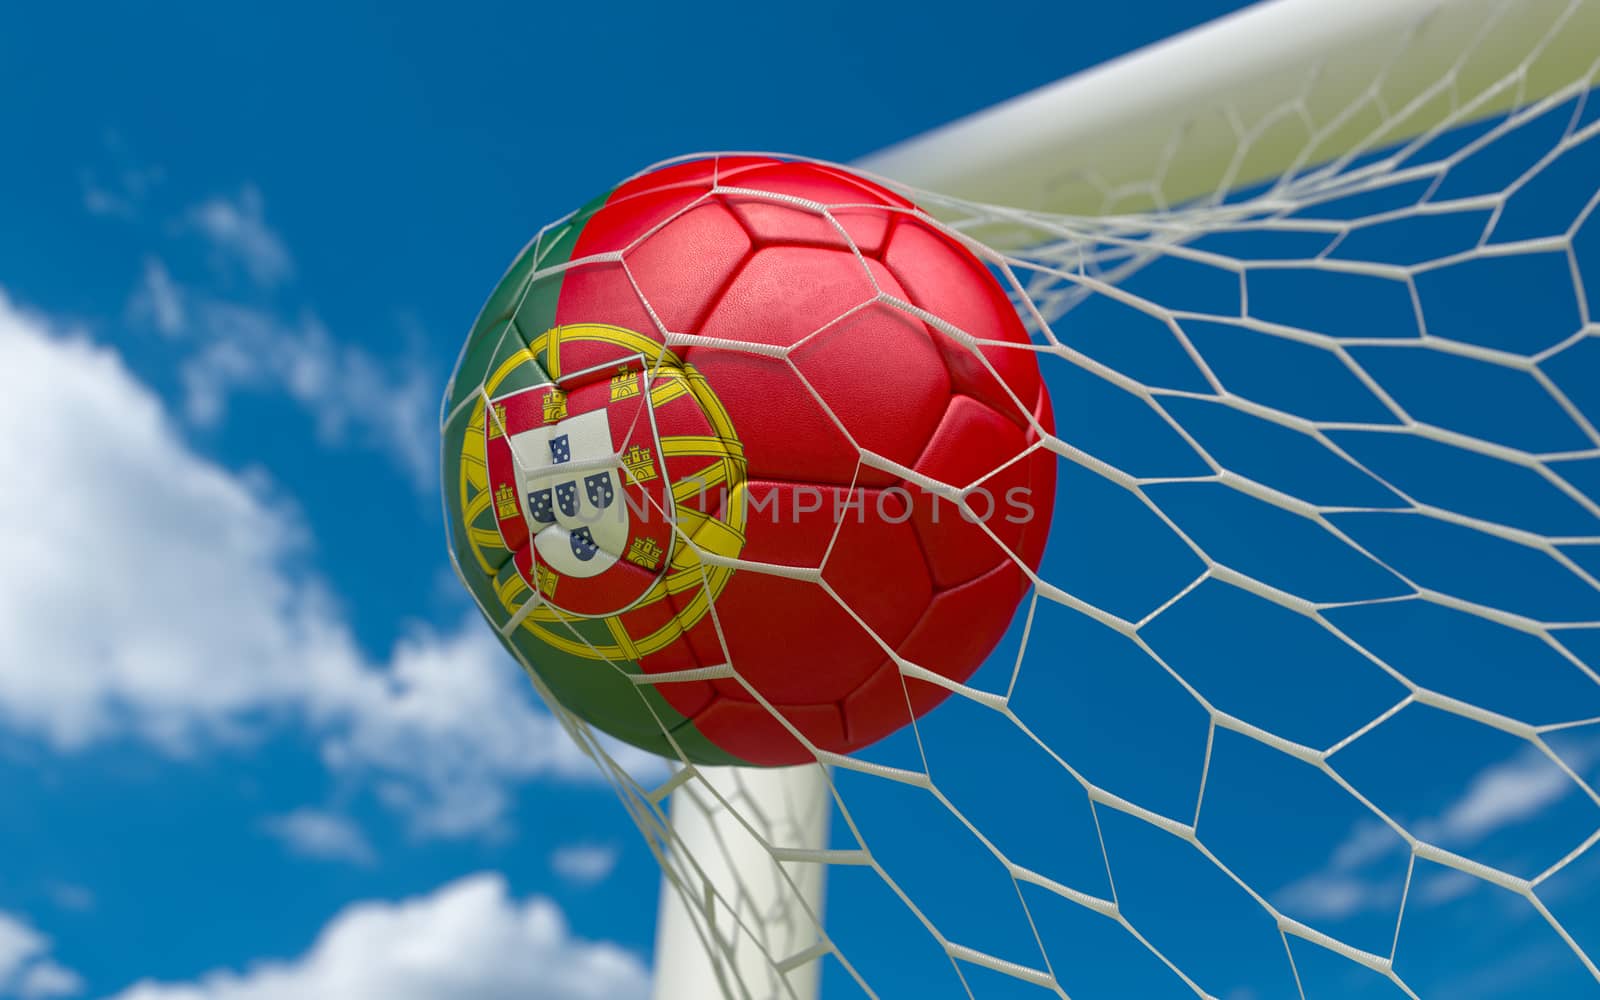 Portugal flag and soccer ball in goal net by Barbraford